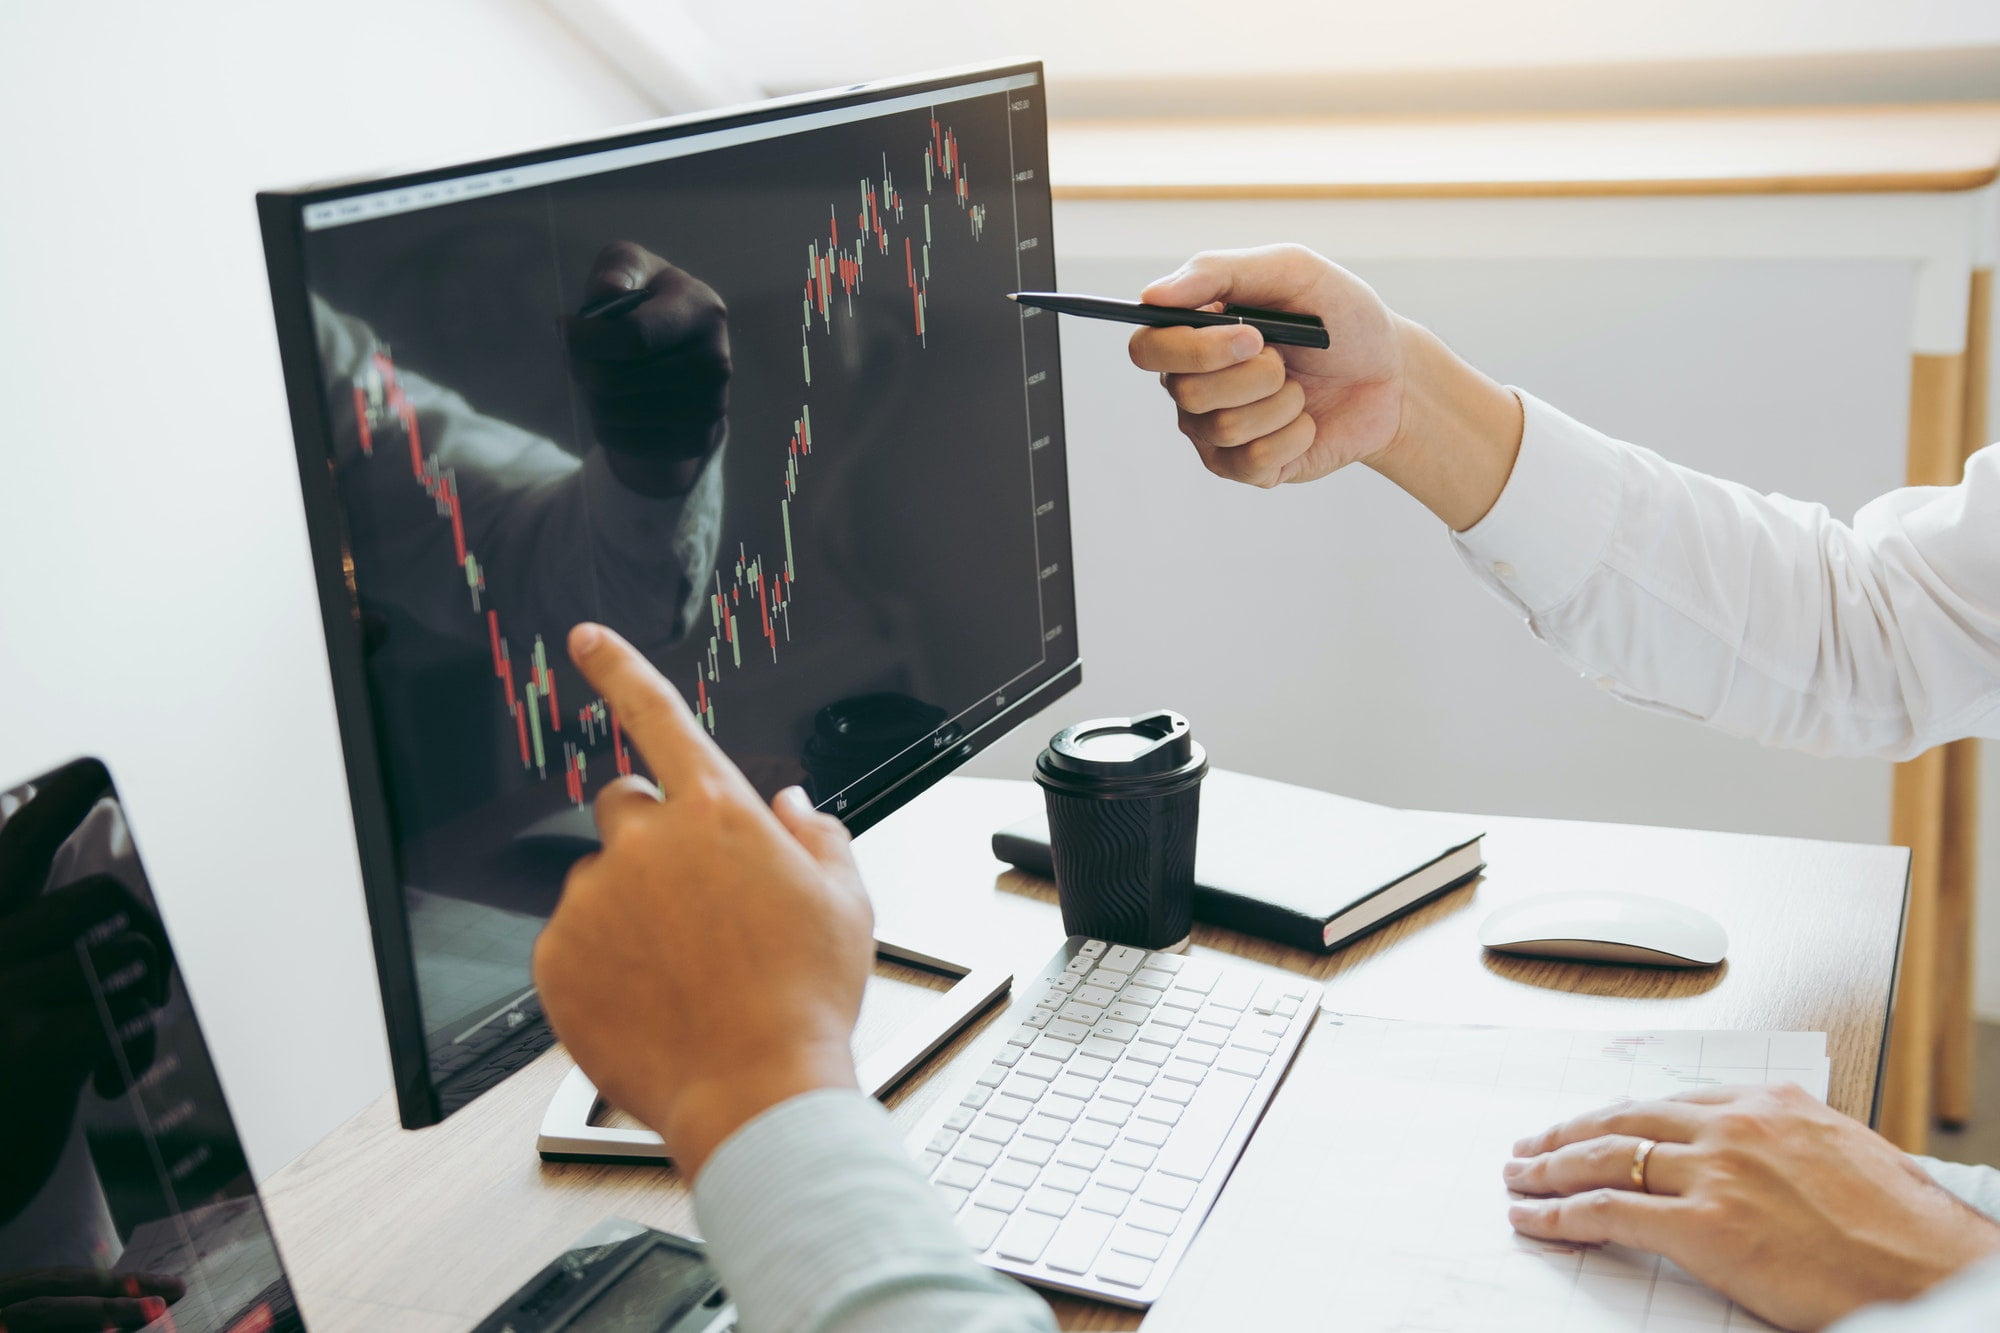 business stock brokers stress and looking at monitors displaying financial stock graph